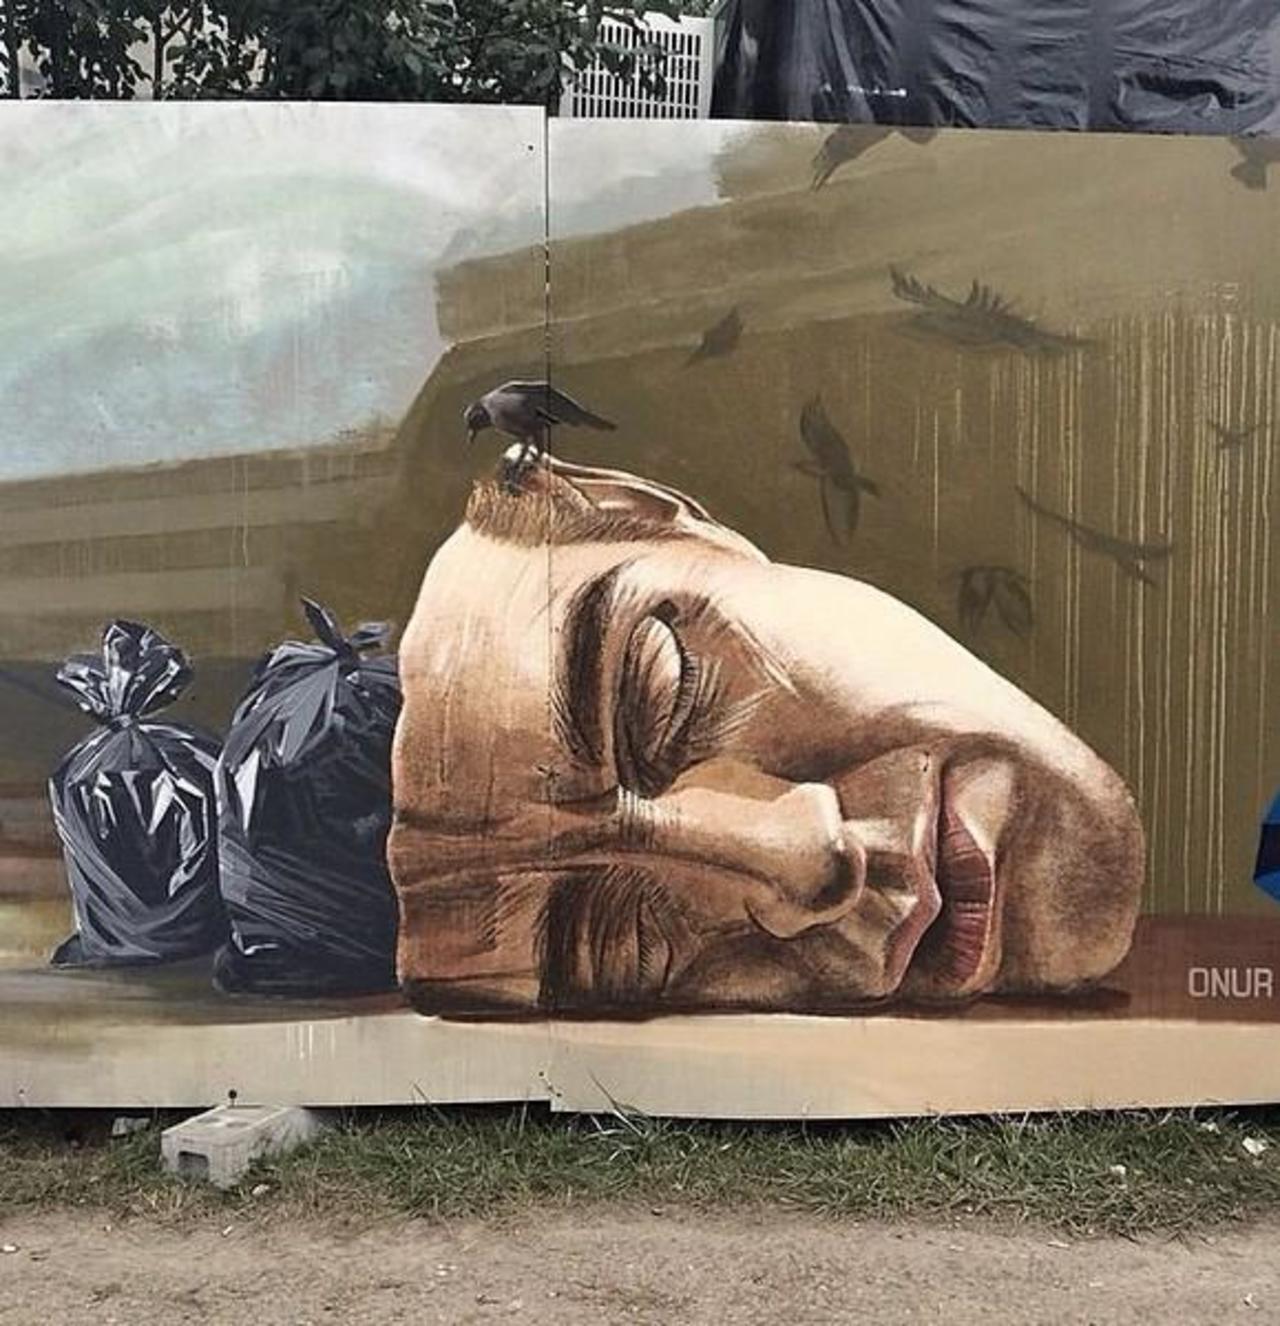 RT @designopinion: Artist ONUR new Street Art piece located in Biel, Switzerland #art #graffiti #mural #streetart http://t.co/Lo3h5W0V7N